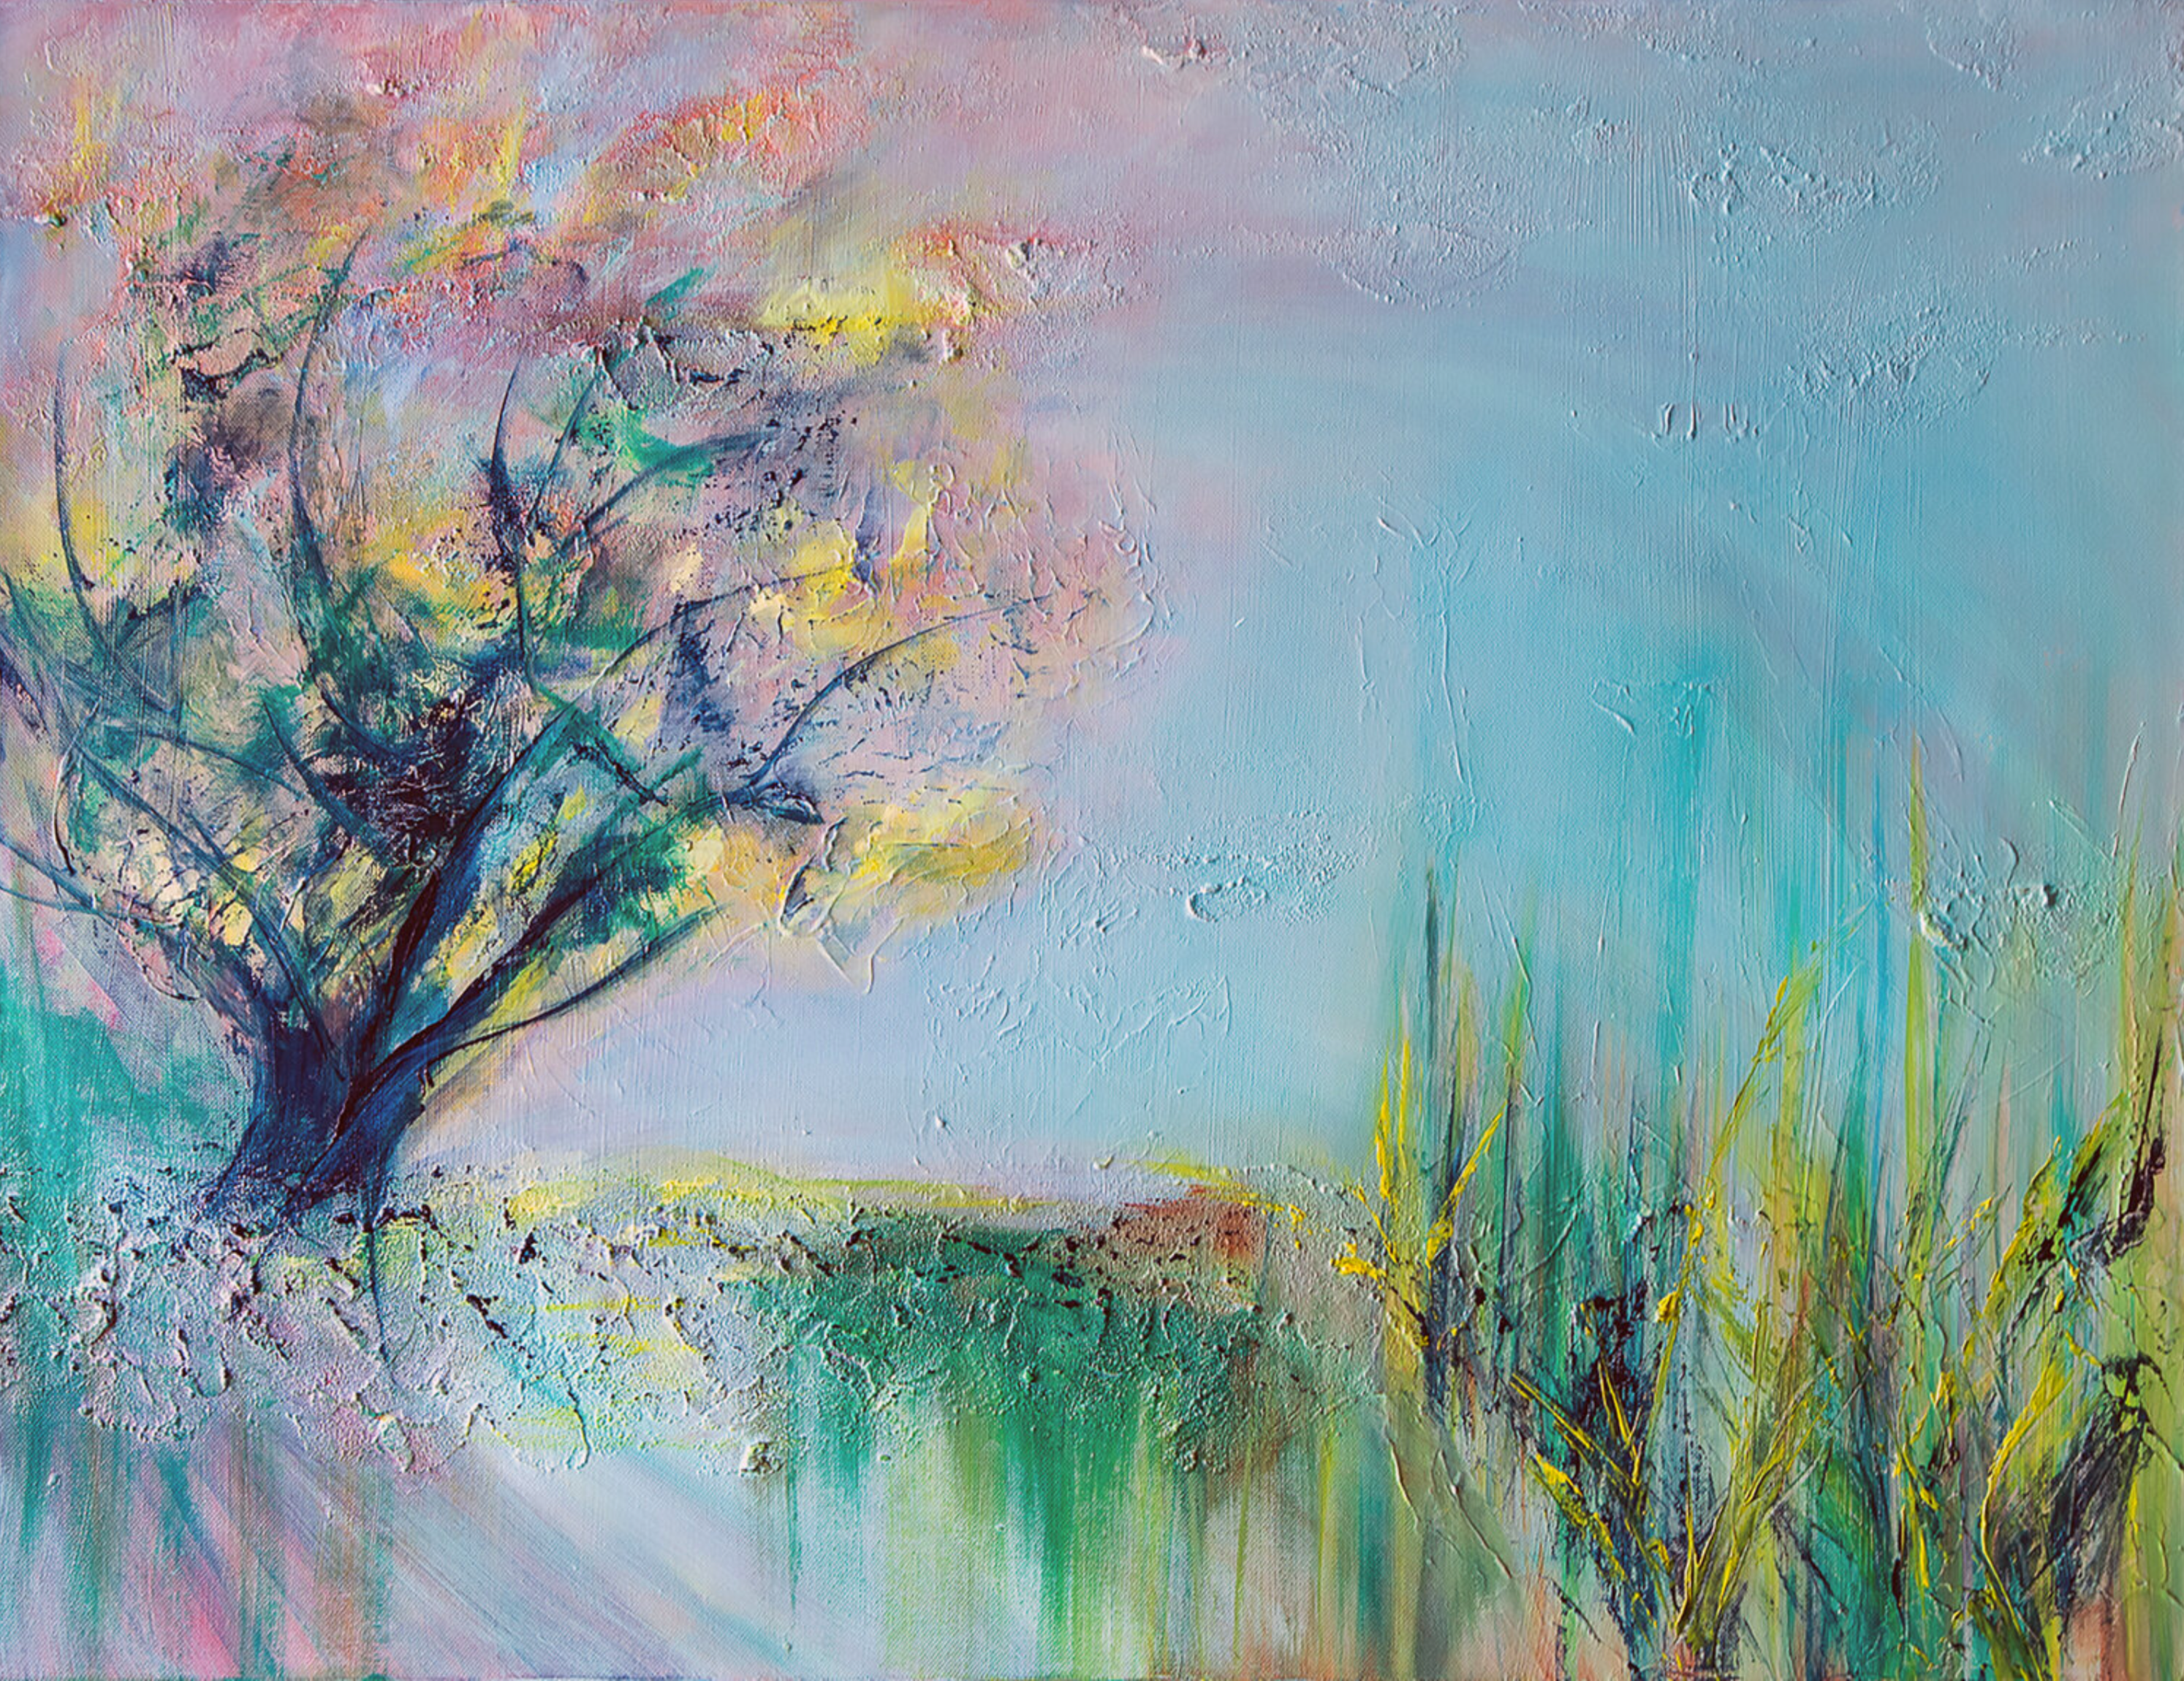 Françoise Dugourd-Caput的 "Réveil printanier "抽象画展示了想象中的野草运动中的花朵，这些野草被风抚摸，被穿过植被的太阳光照亮....。在手势的冲动下，露珠的出现与色彩相协调。温柔的和春天一样的生命回归的色彩